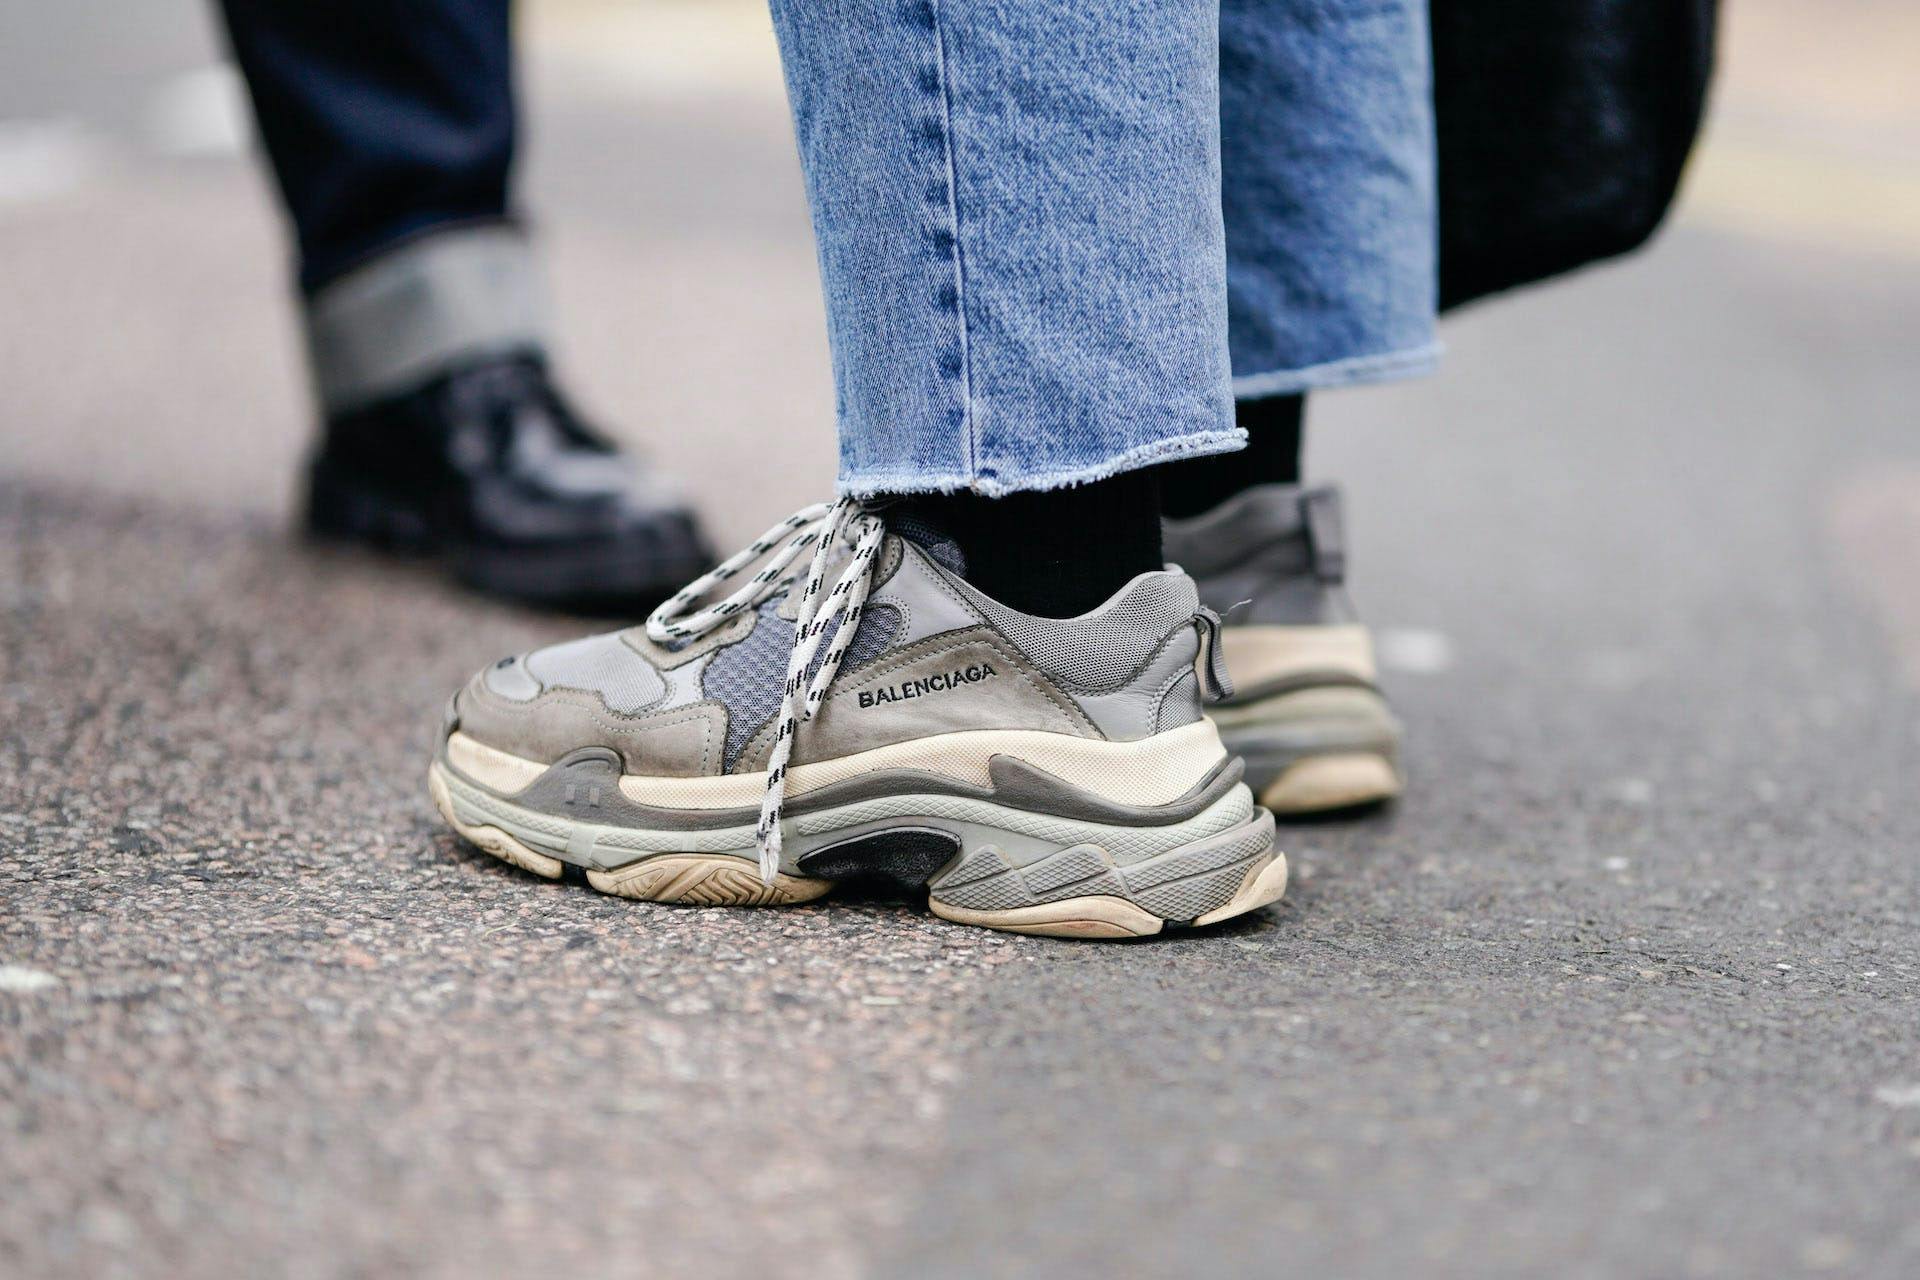 london england shoe clothing footwear apparel person human pants sneaker